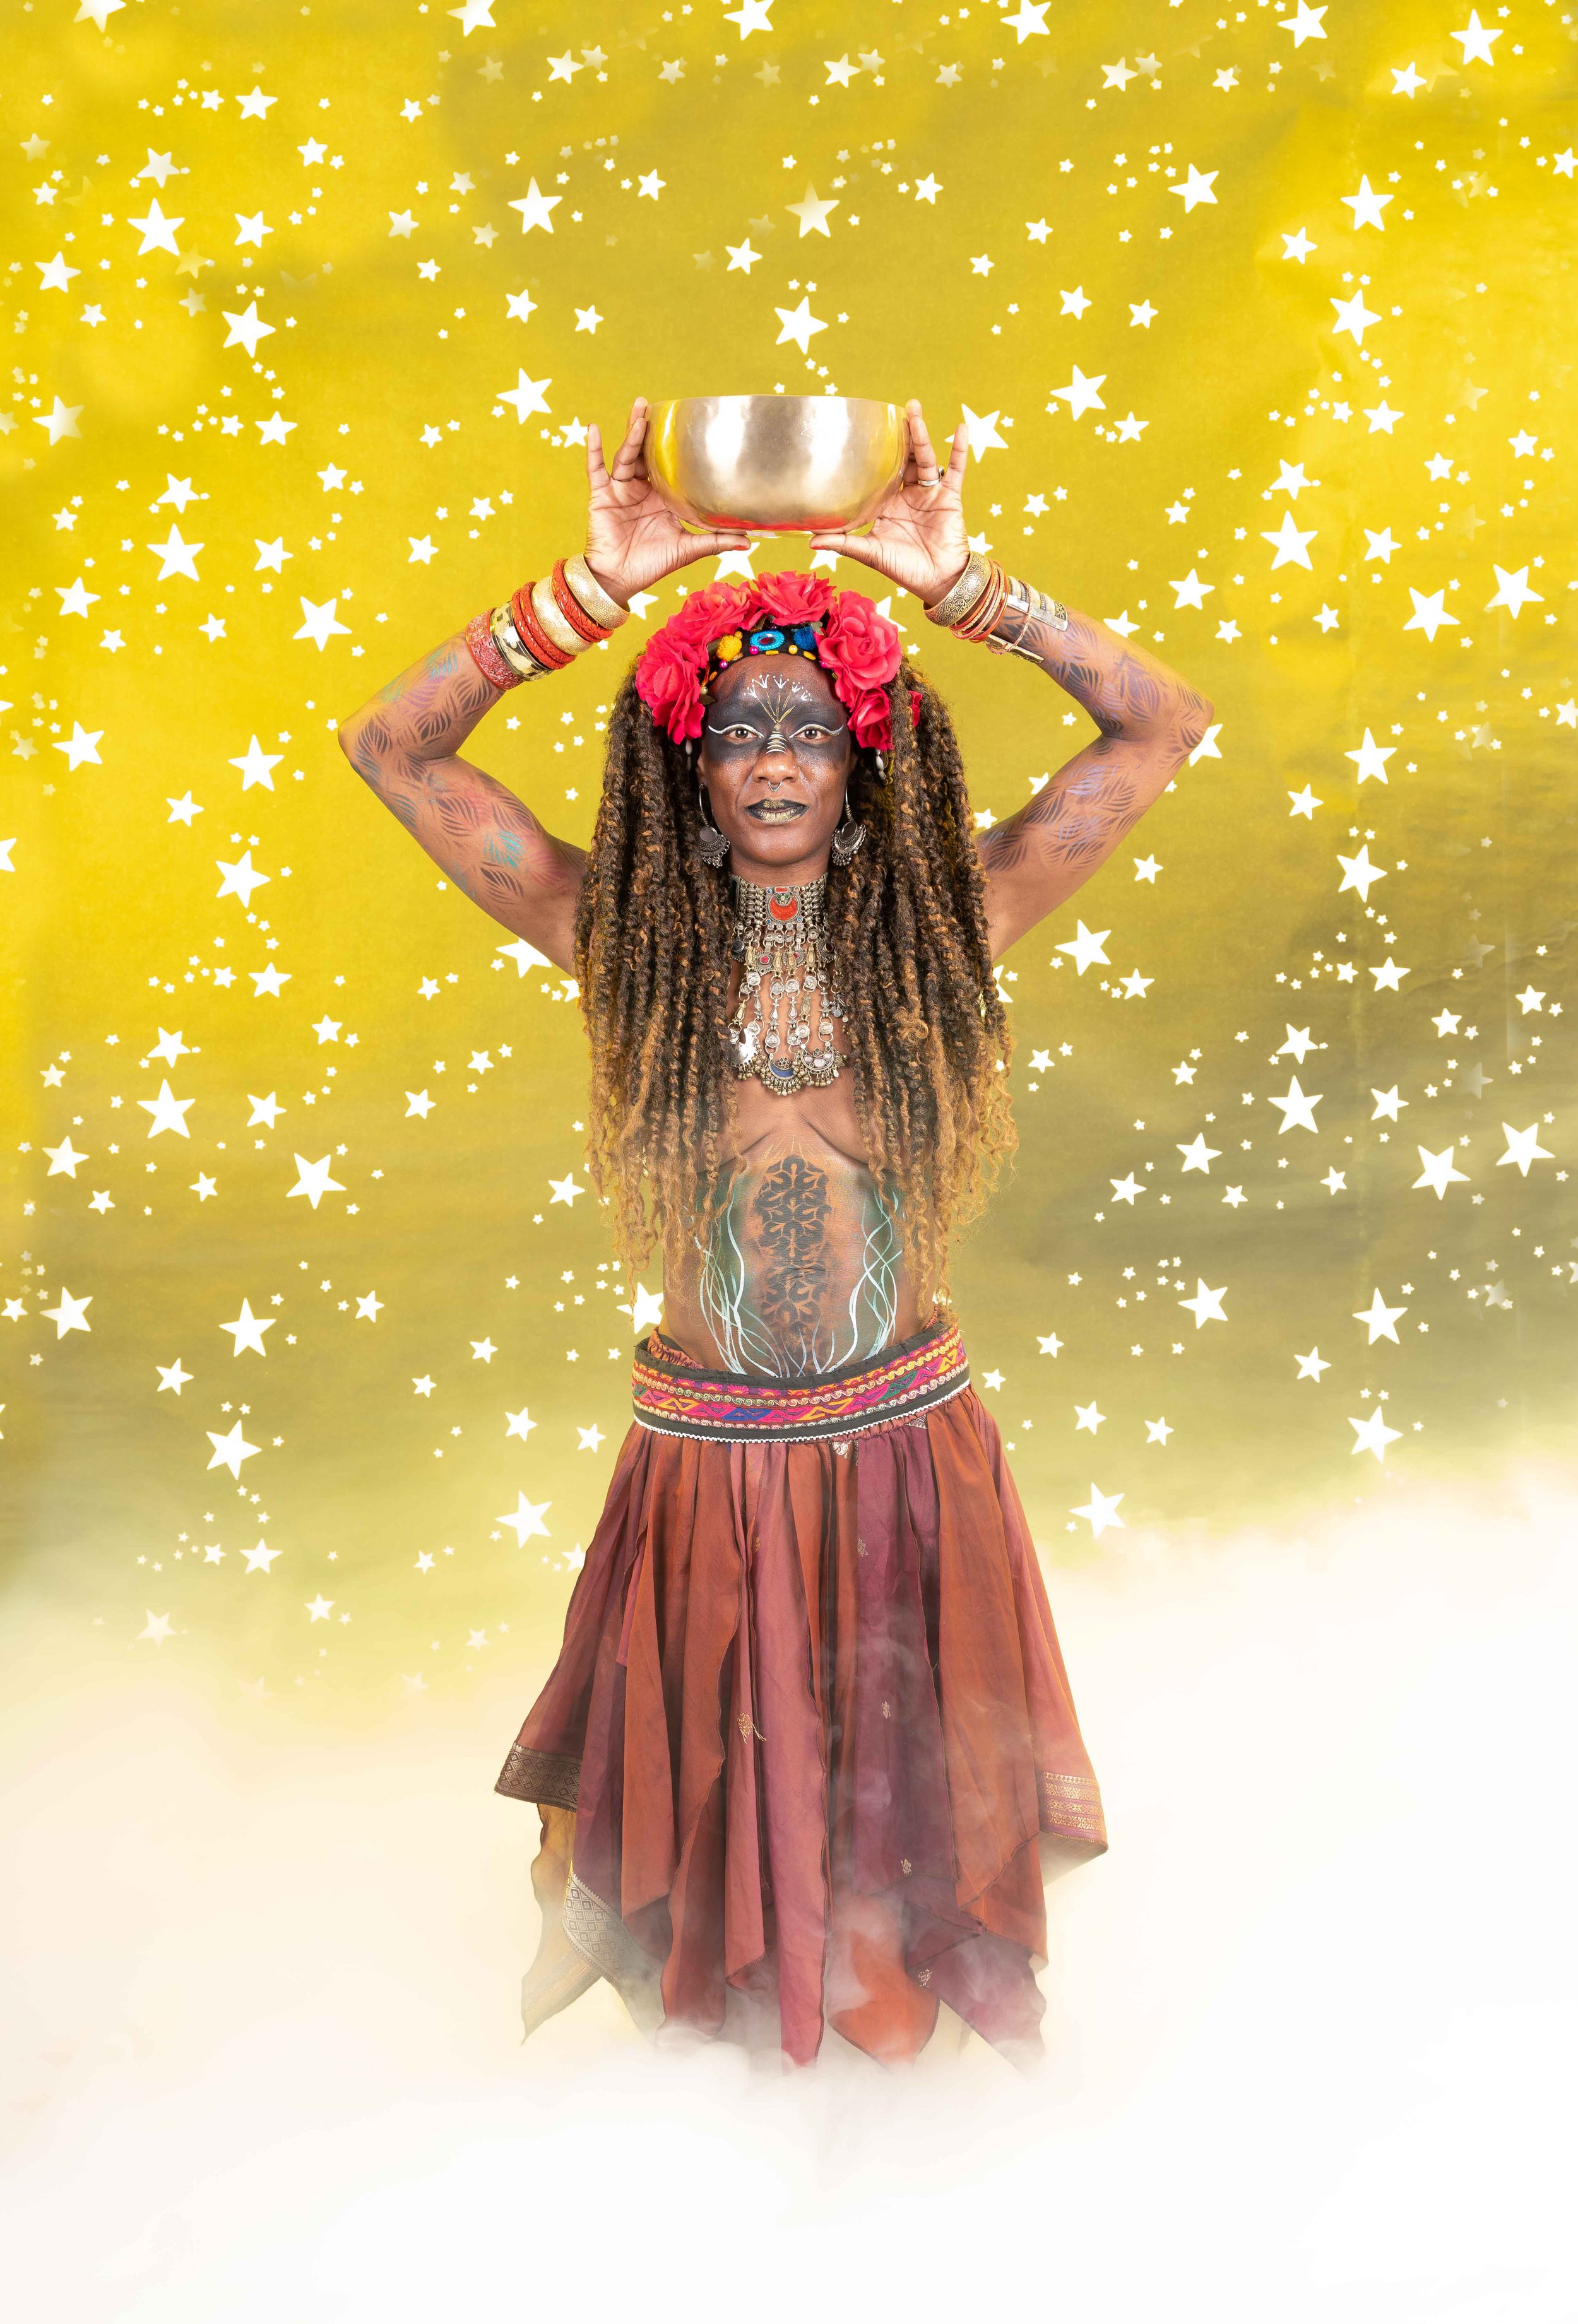 Rachael Dennis - Multi-Disciplinary Artist/ Tribal Belly Dancer